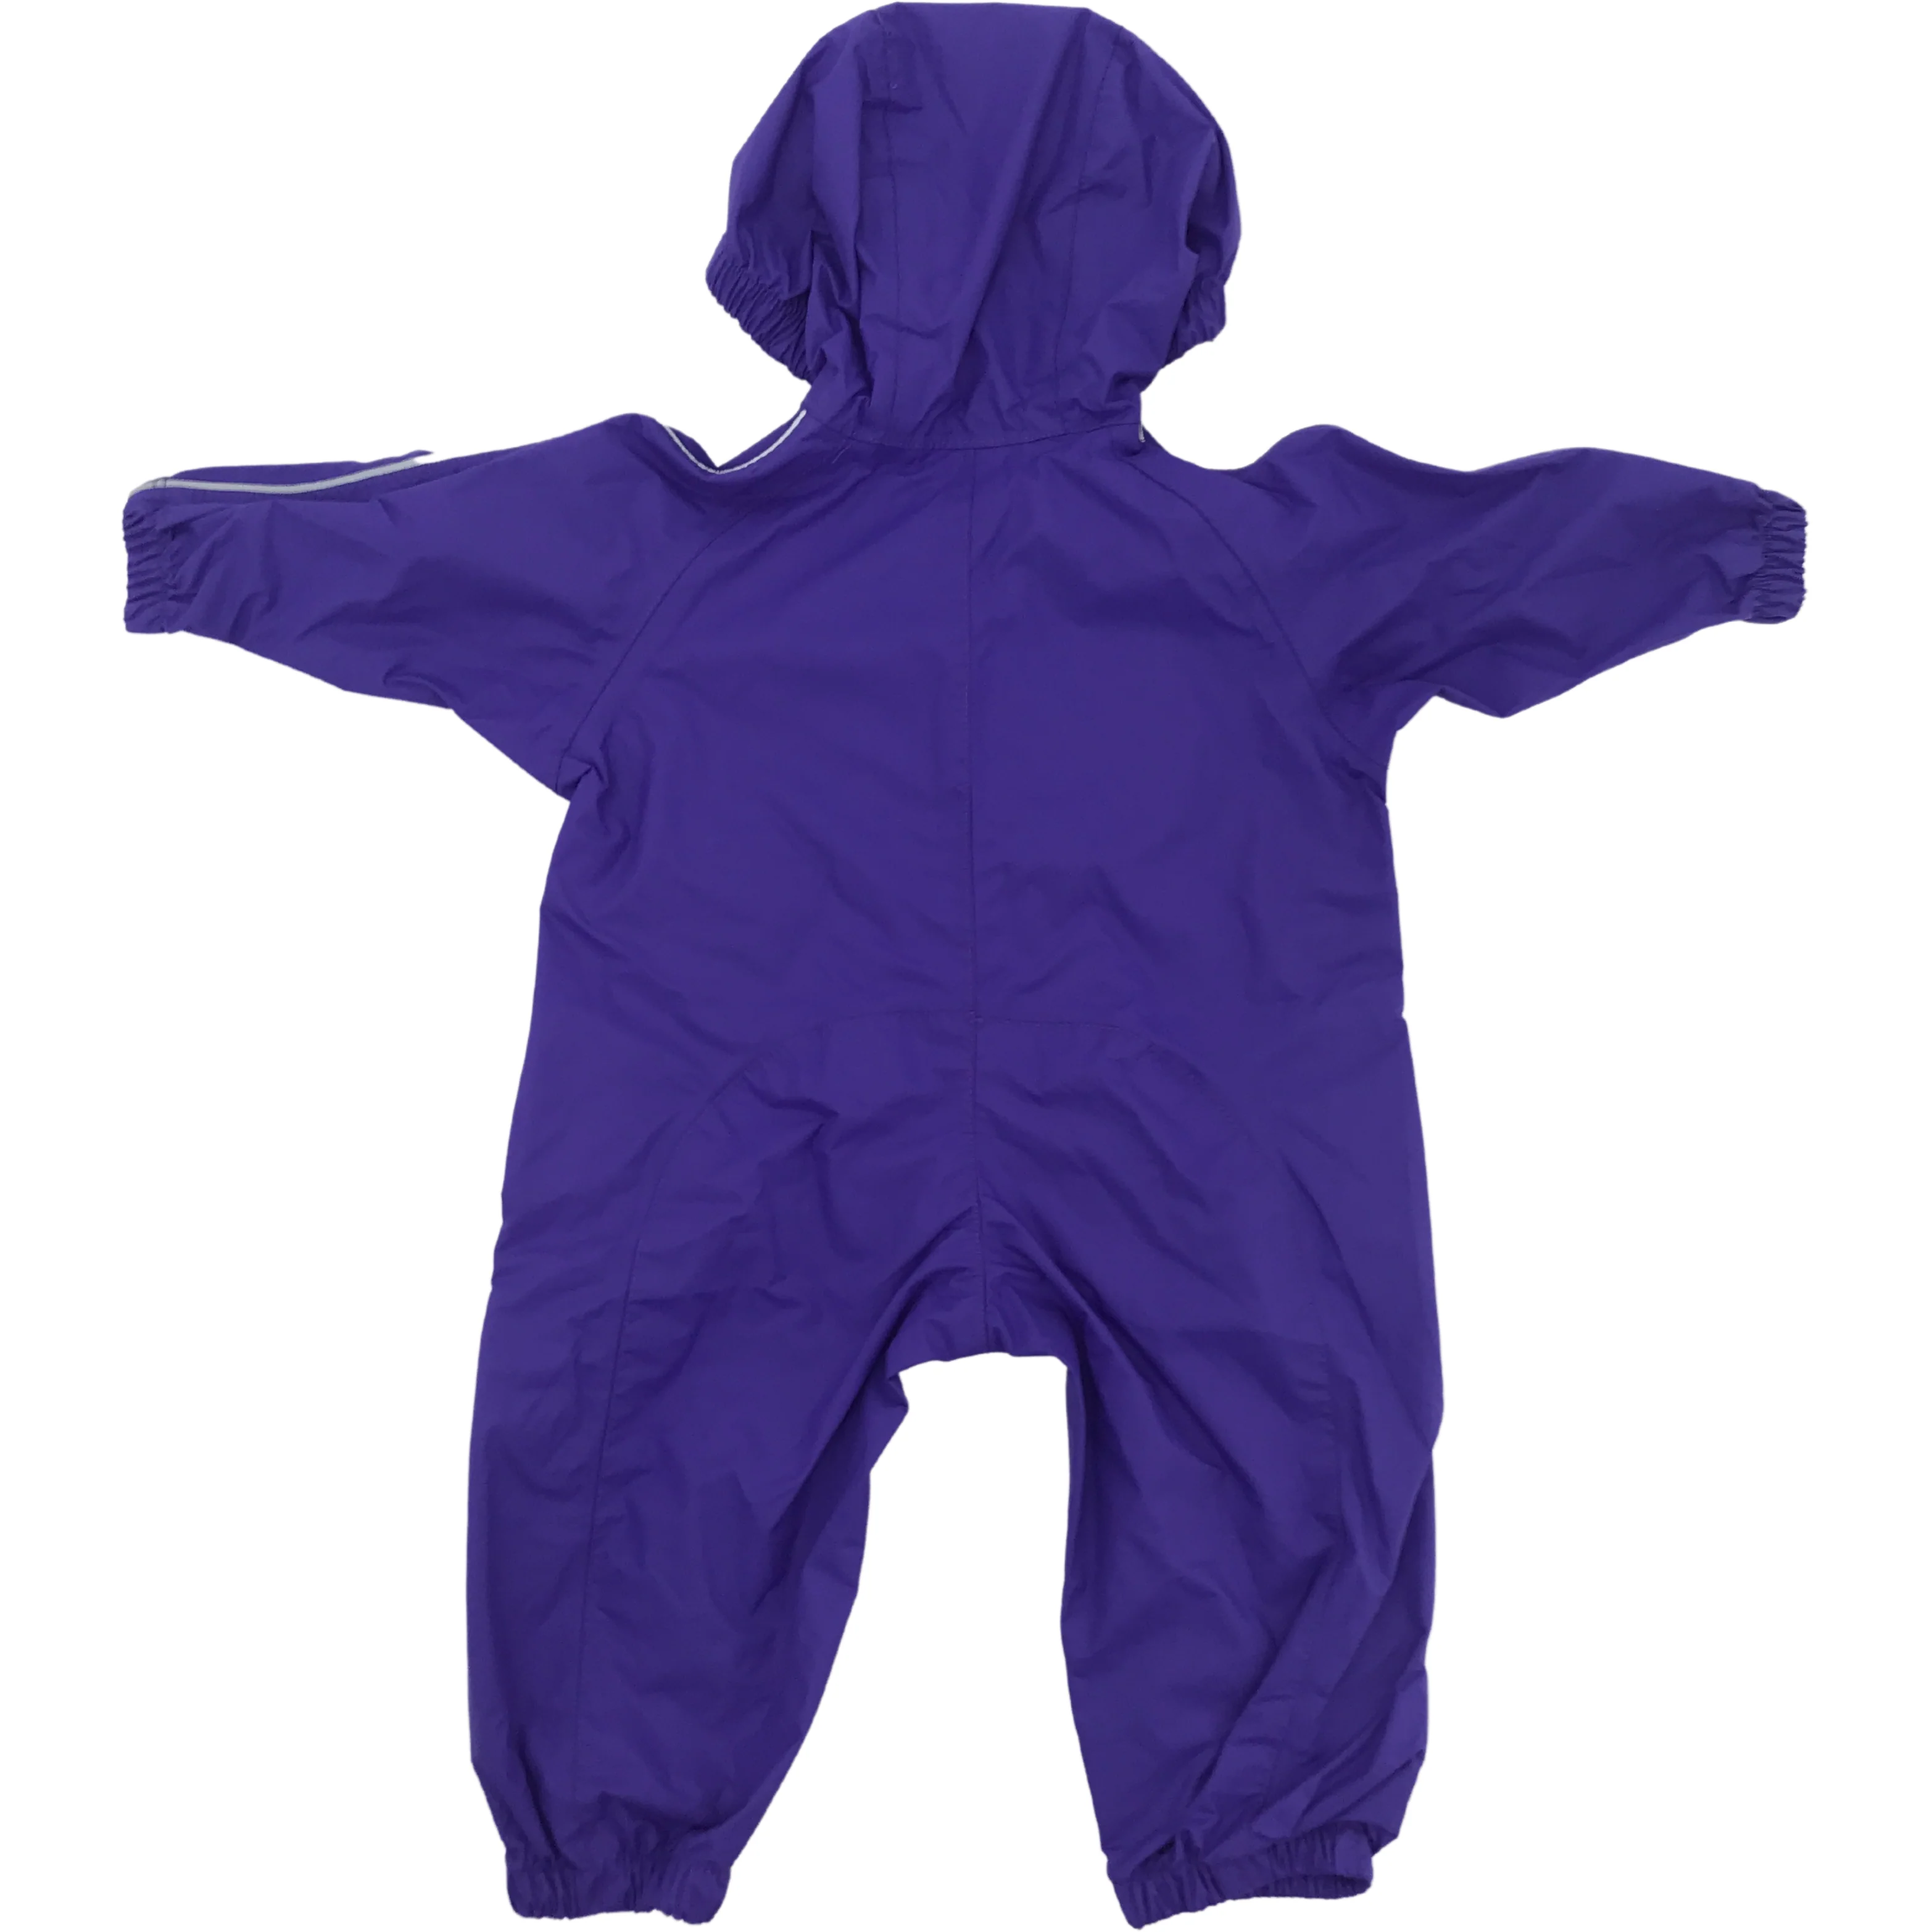 Splashy Toddler Rain Suit / Waterproof Rain Outfit / Purple / 6-12 Months